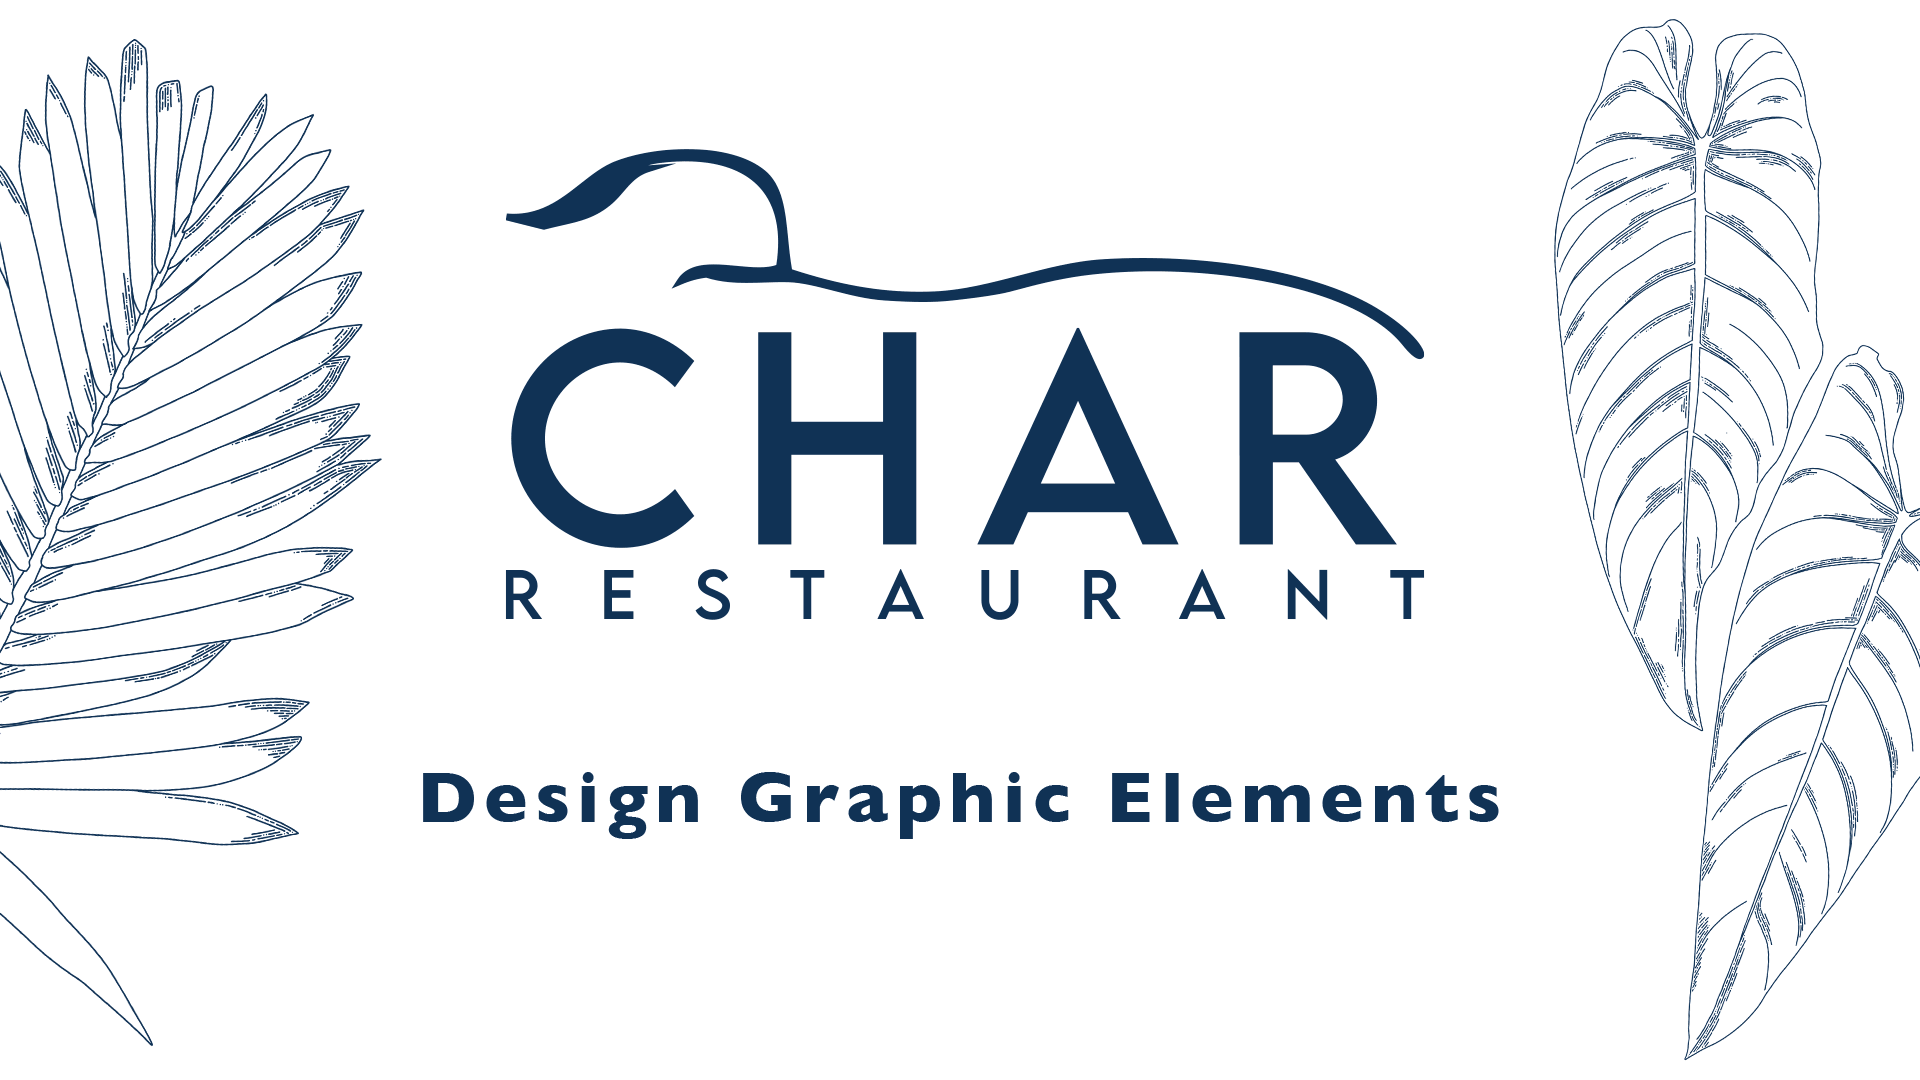 Char Design Elements brand elements design design elements graphic design illustrated graphic elements illustration plant illustration